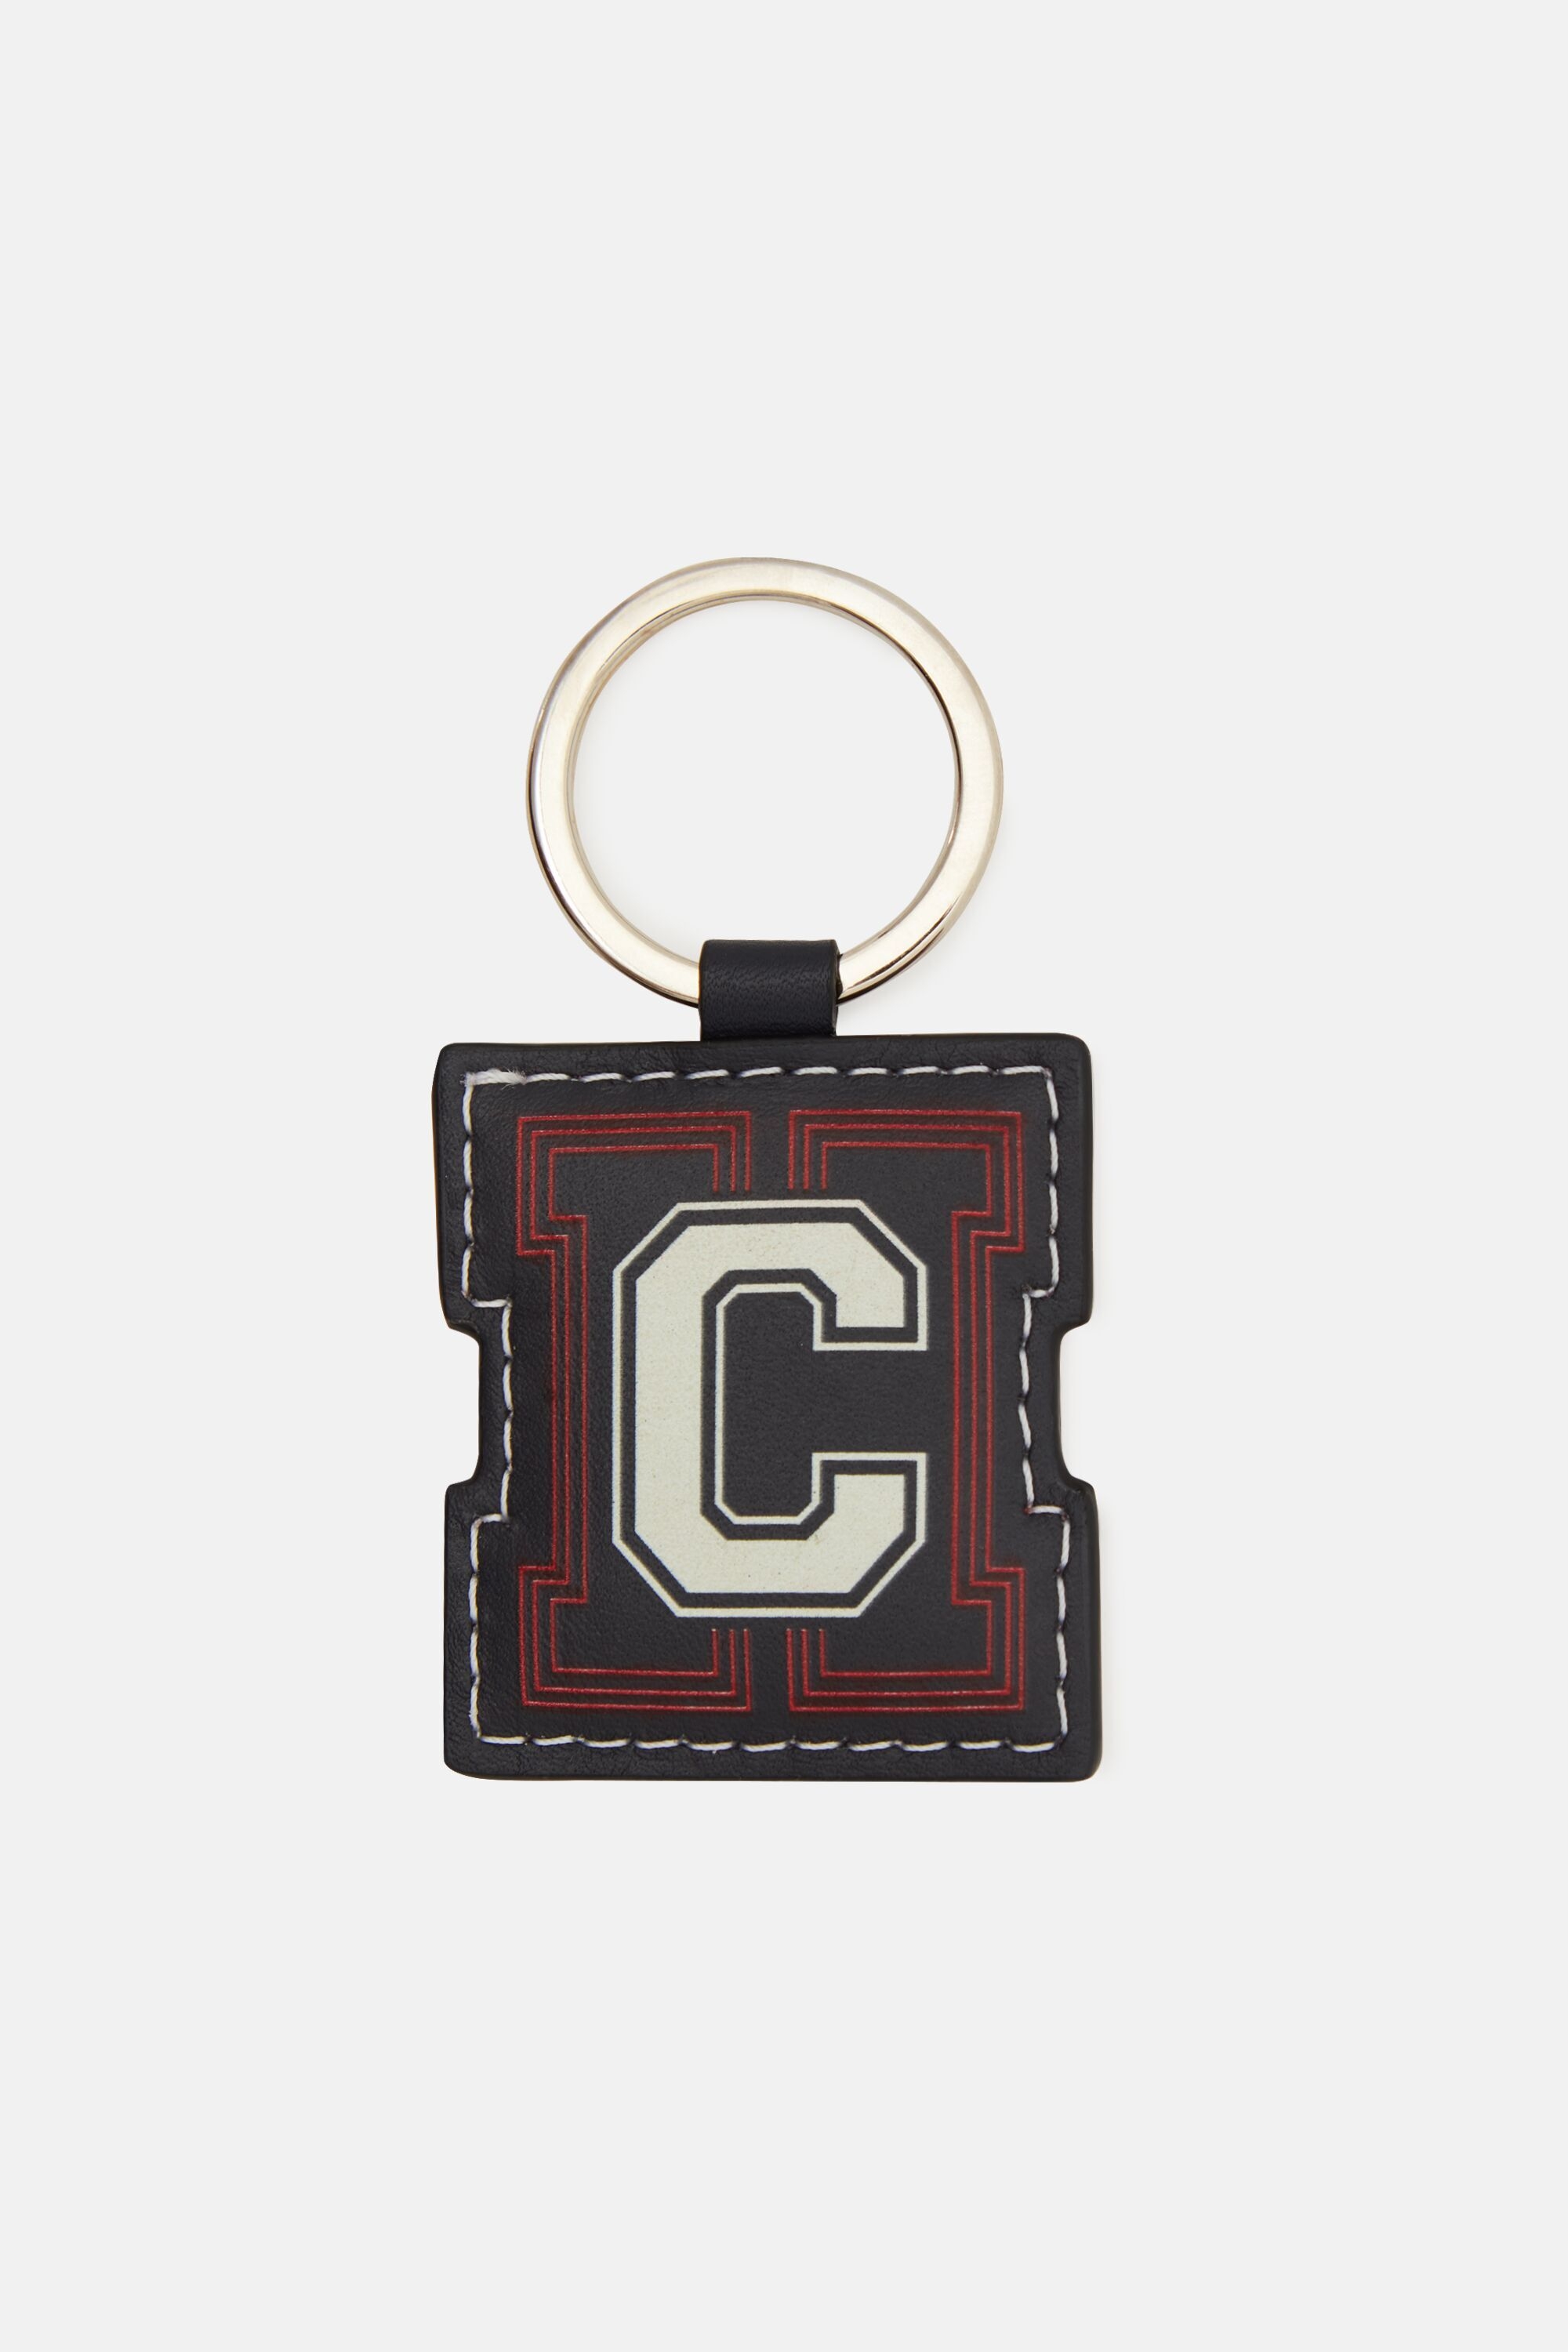 CH Varsity leather keychain